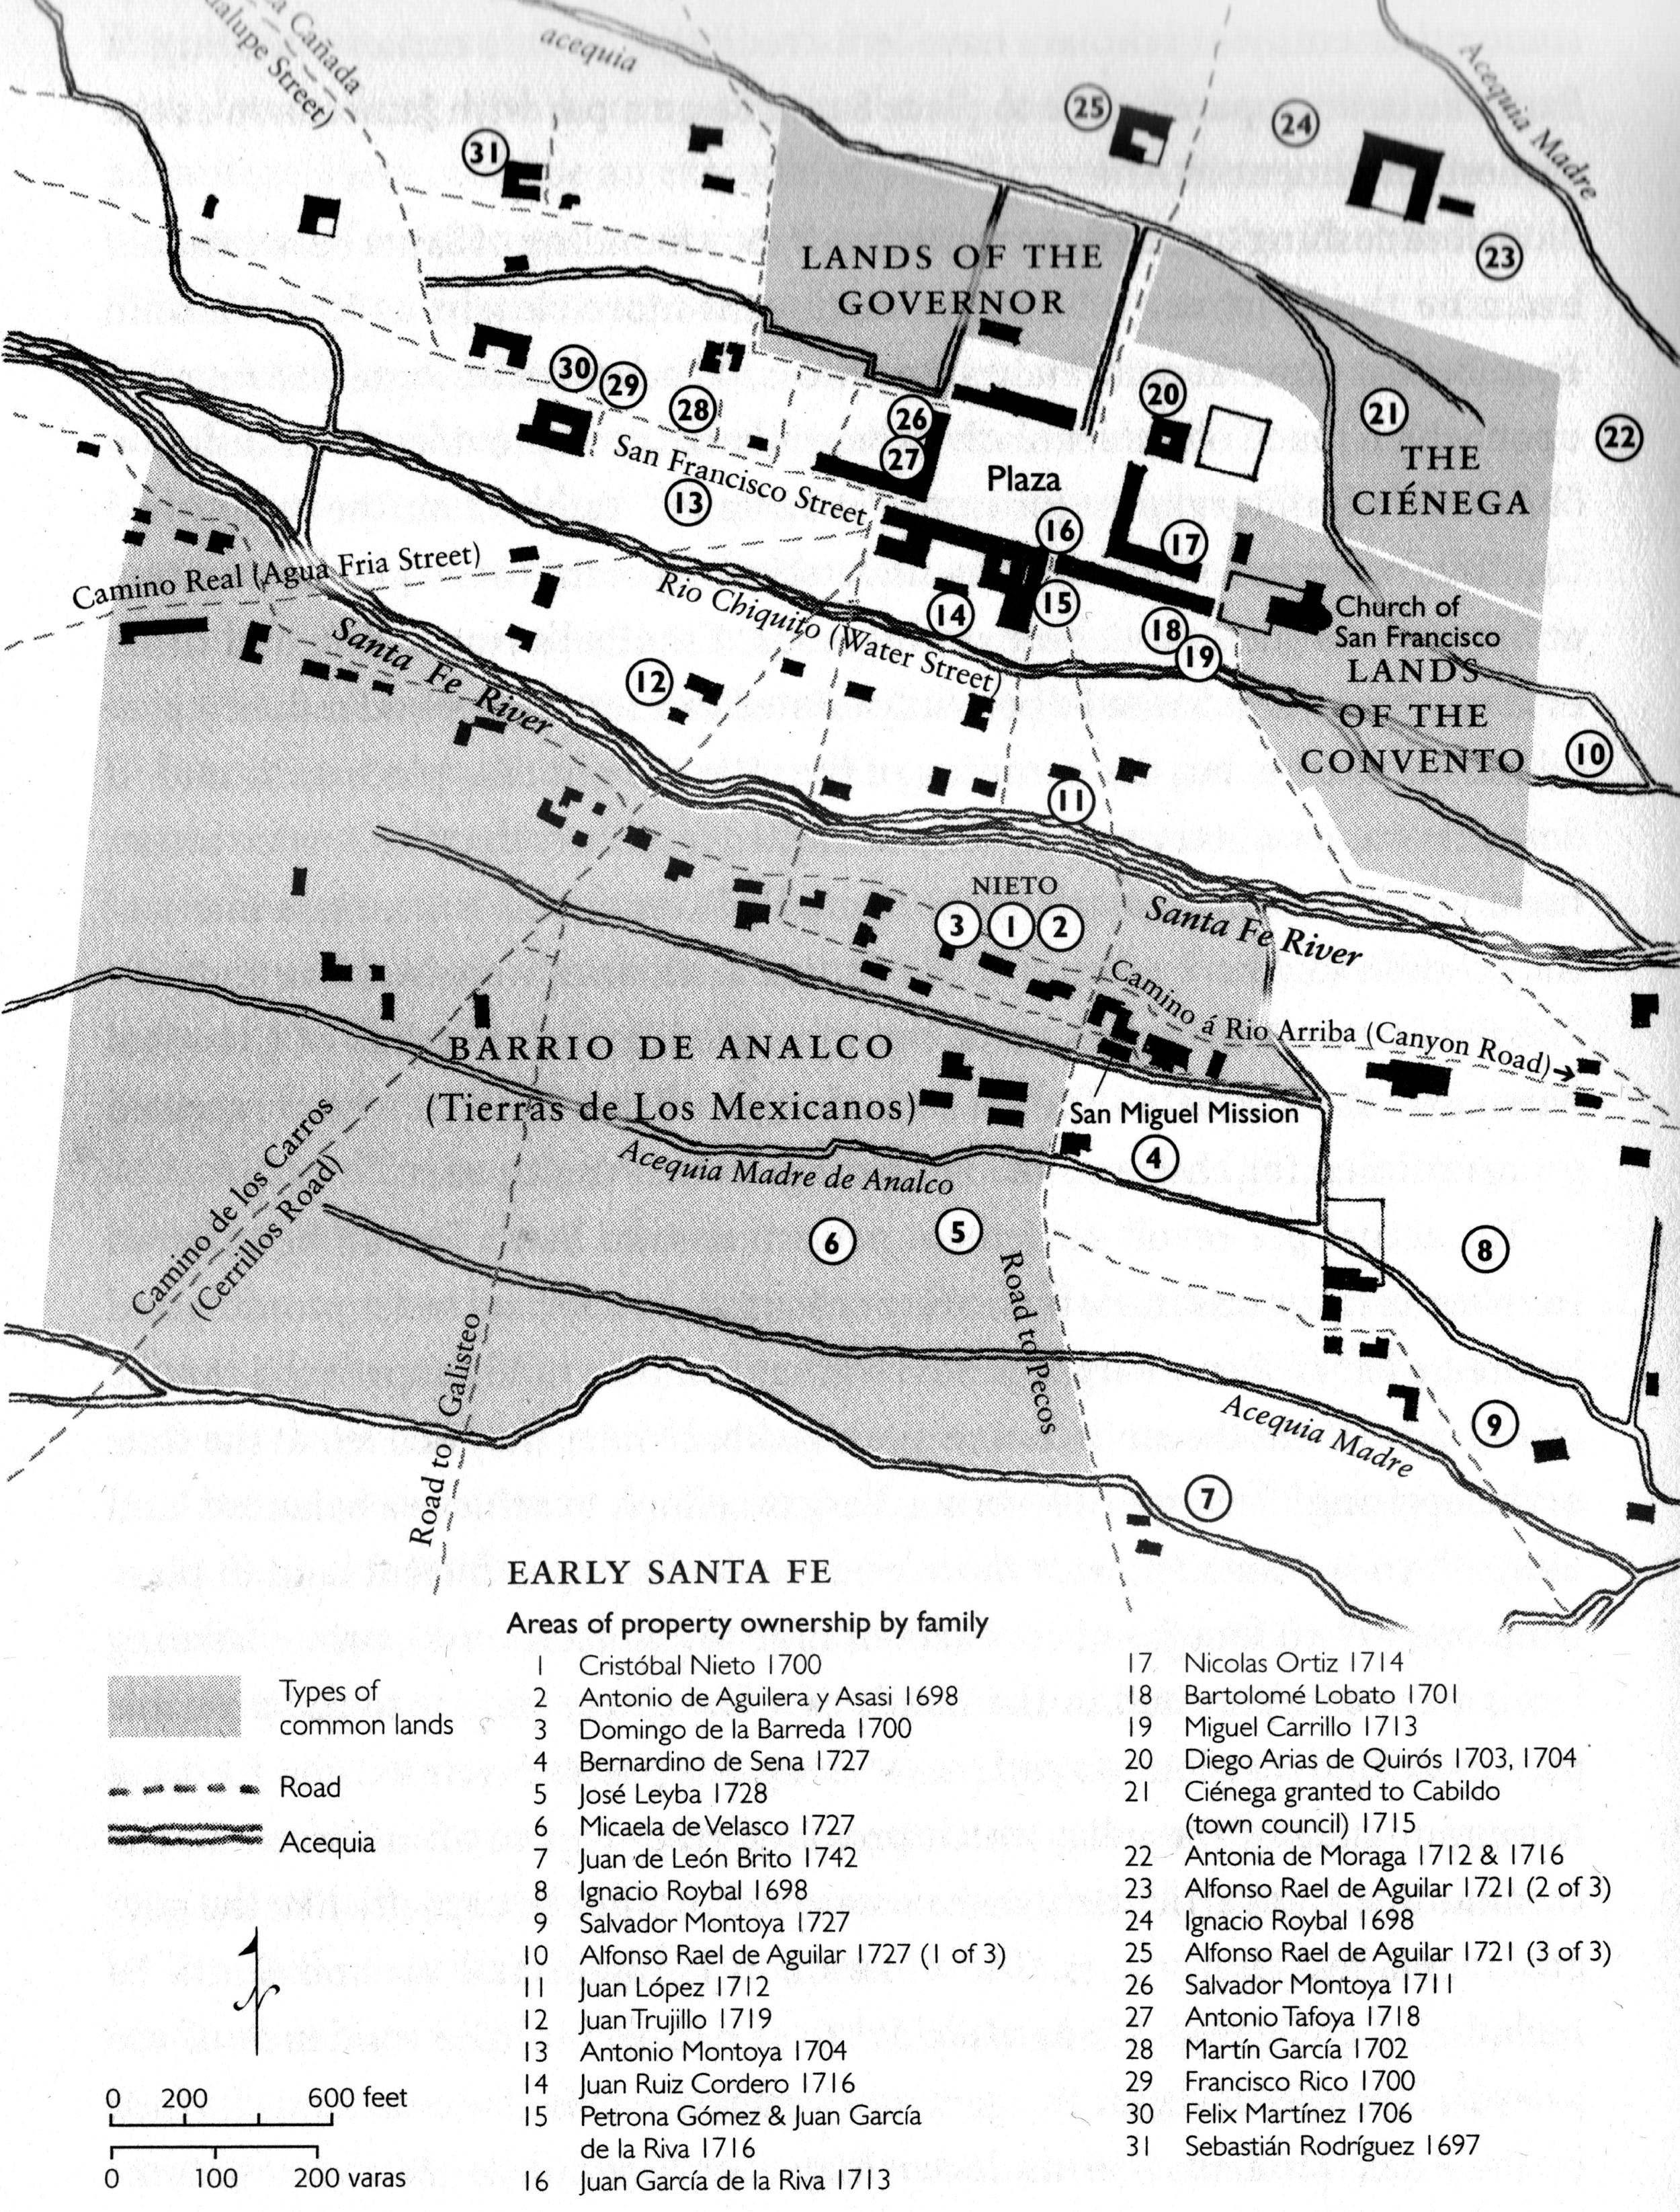 25 - Downtown Santa Fe 1730 (Map 3)